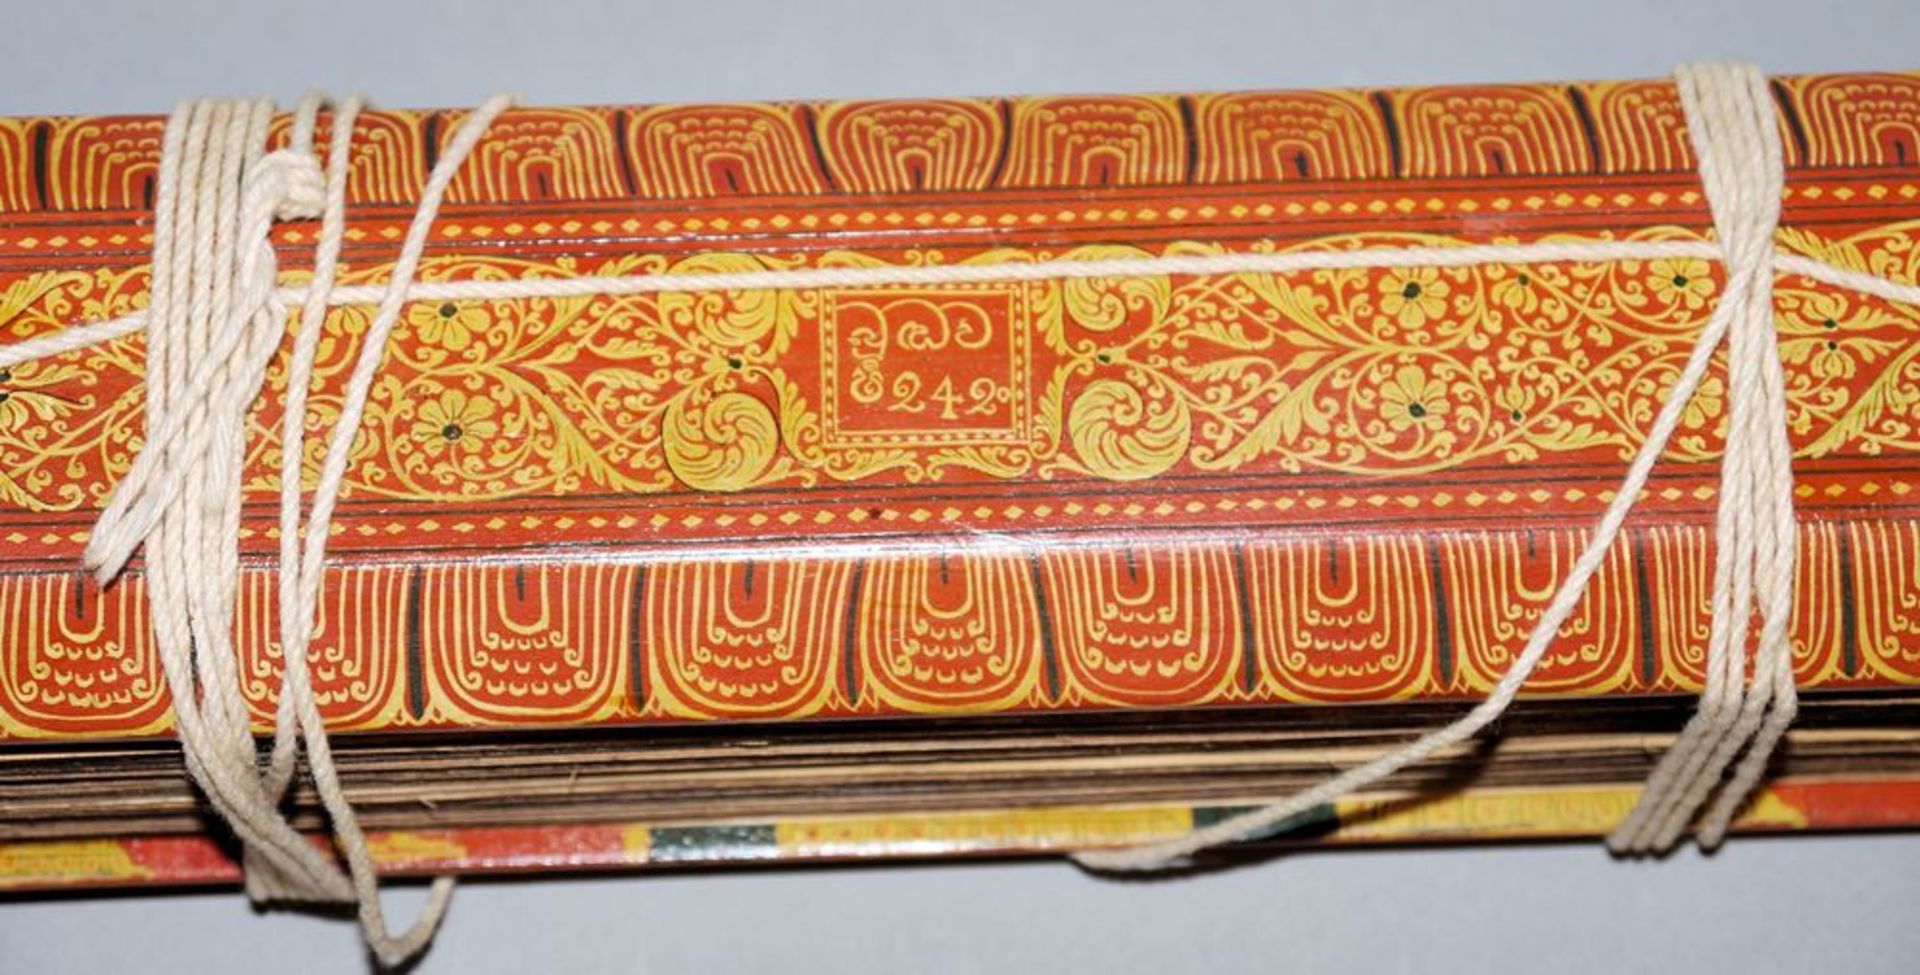 Buddhistisches Palmblatt-Manuskript, Sri Lanka, wohl Ende 19. Jh. - Bild 3 aus 3